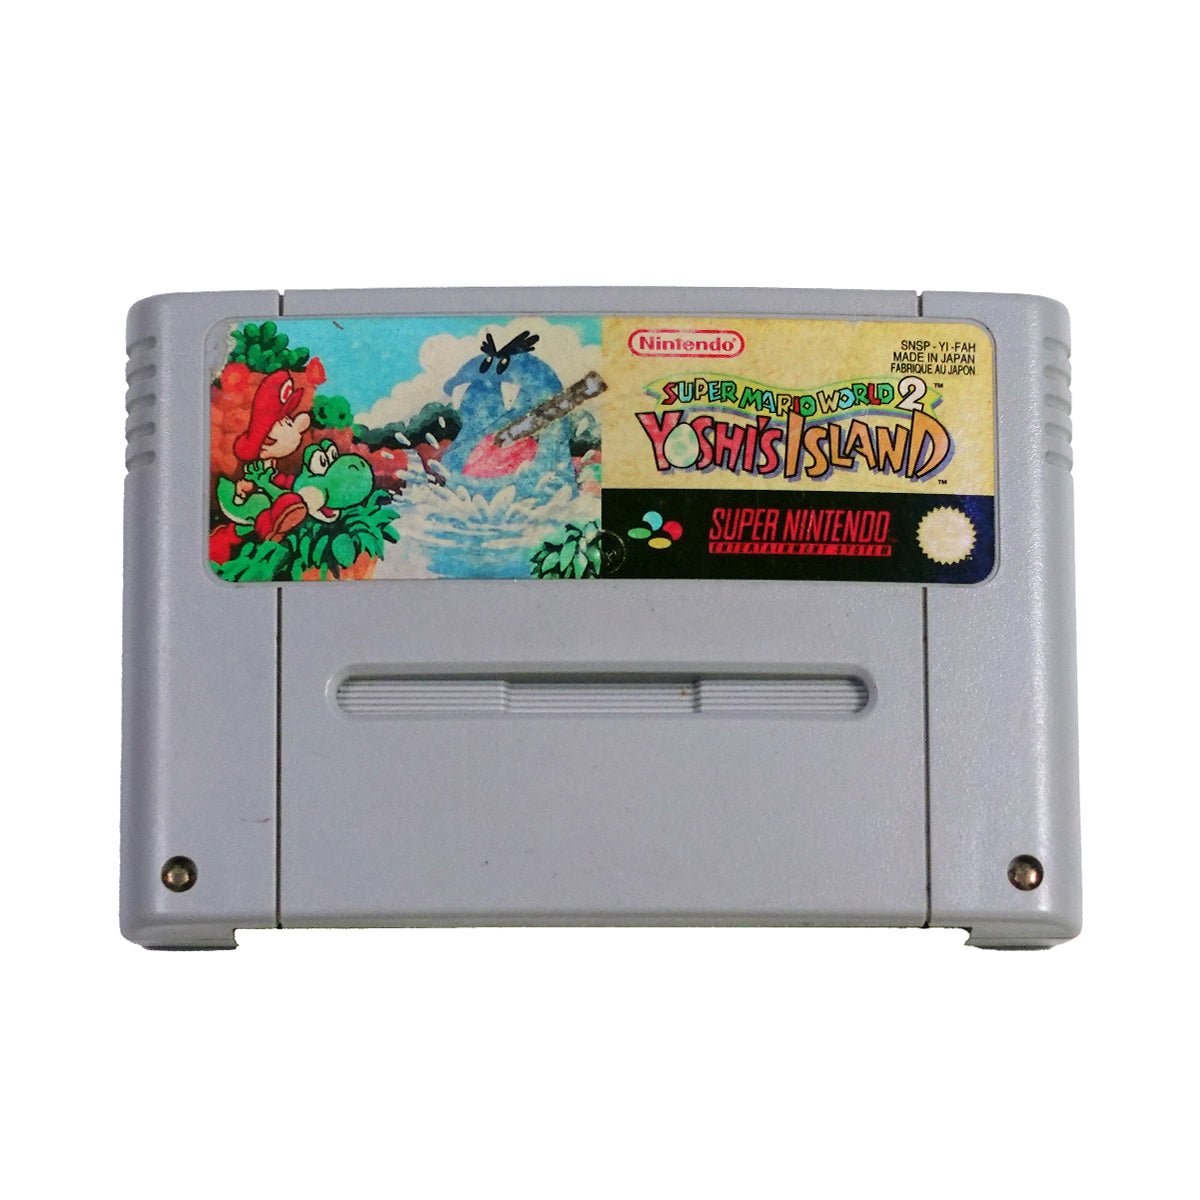 (Pre-Owned) Super Mario's World Yoshi's Island - SNES Game - ريترو - Store 974 | ستور ٩٧٤